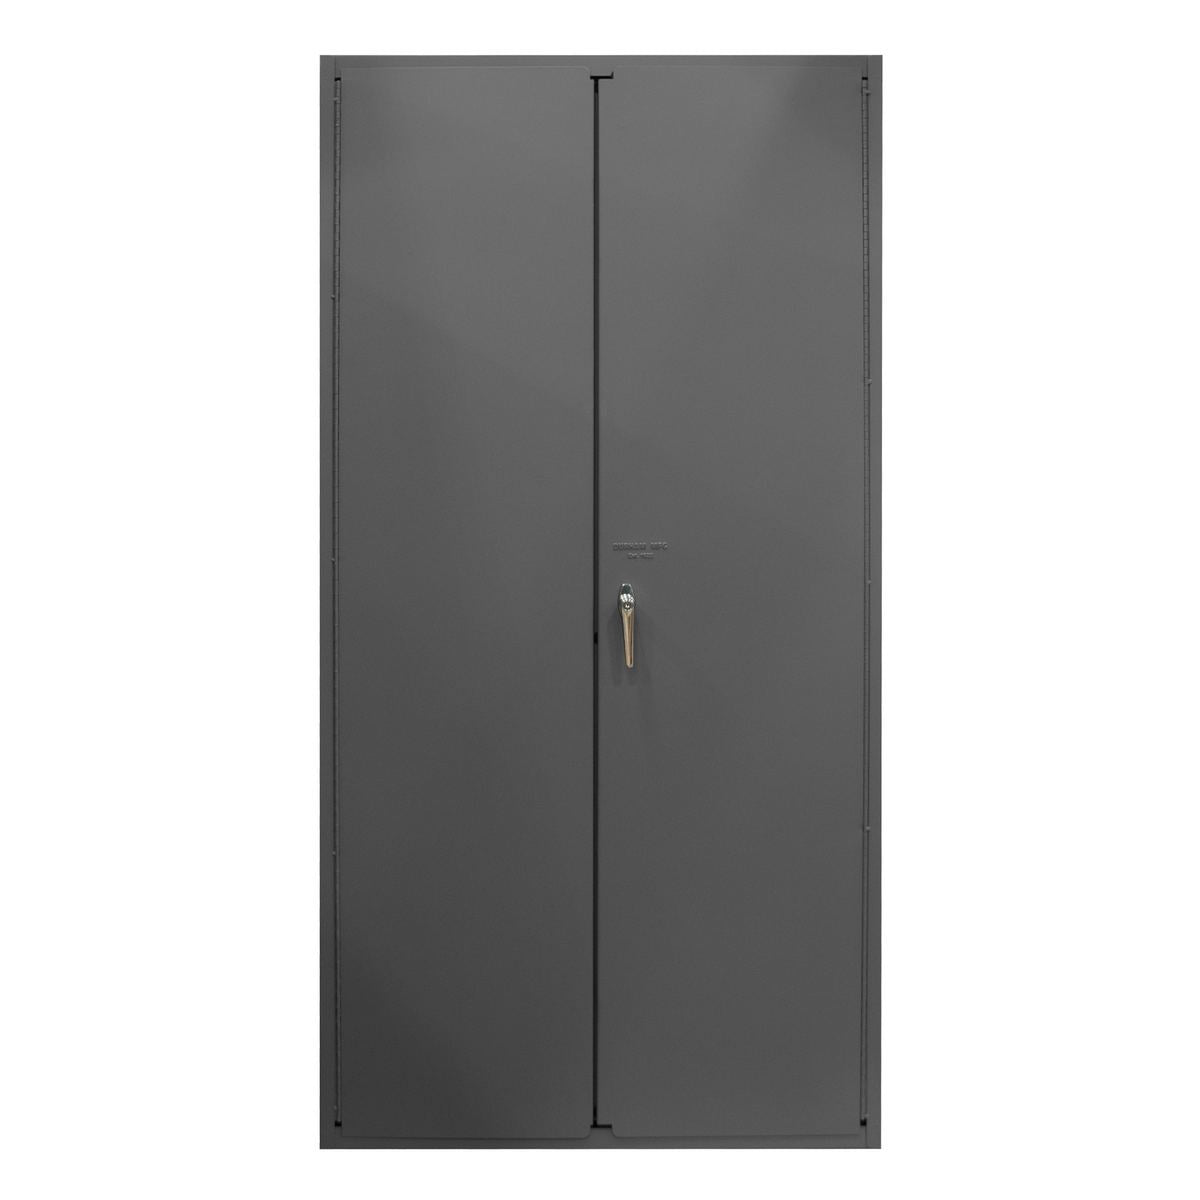 Bin Storage Cabinet - 36 x 24 x 78, 102 Bins